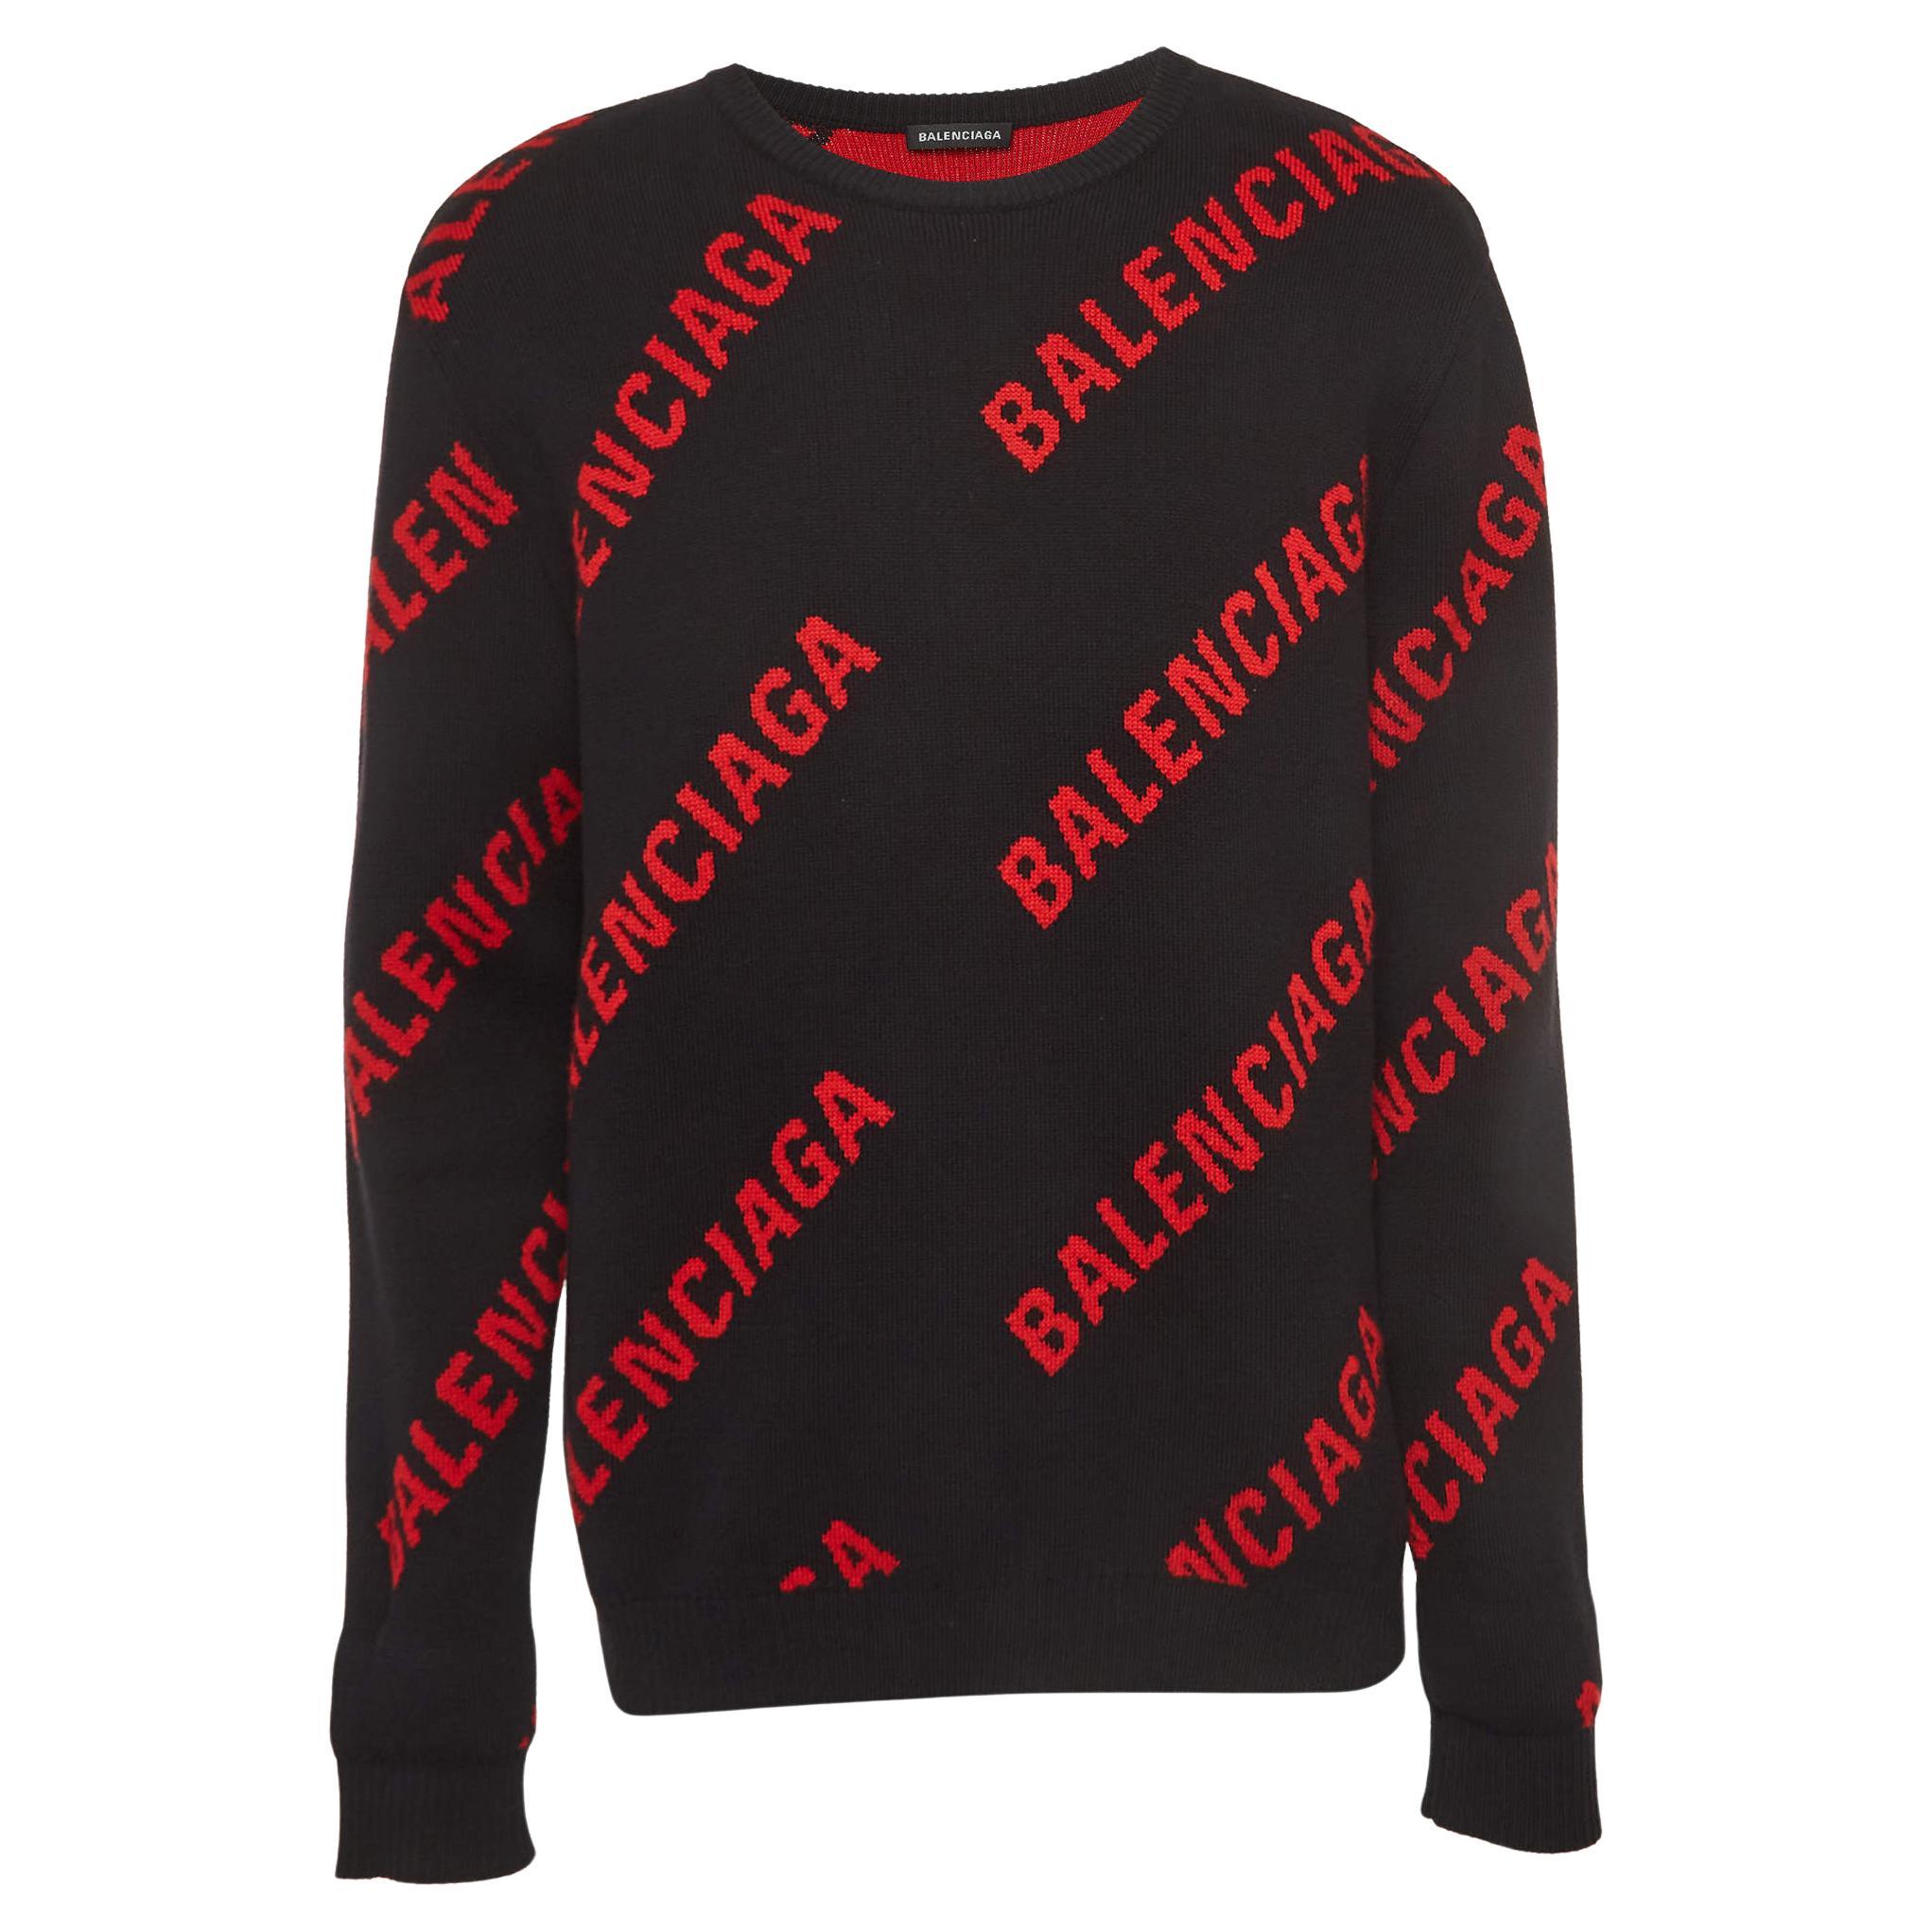 Balenciaga Black/Red Logo Intarsia Knit Crew Neck Sweater L